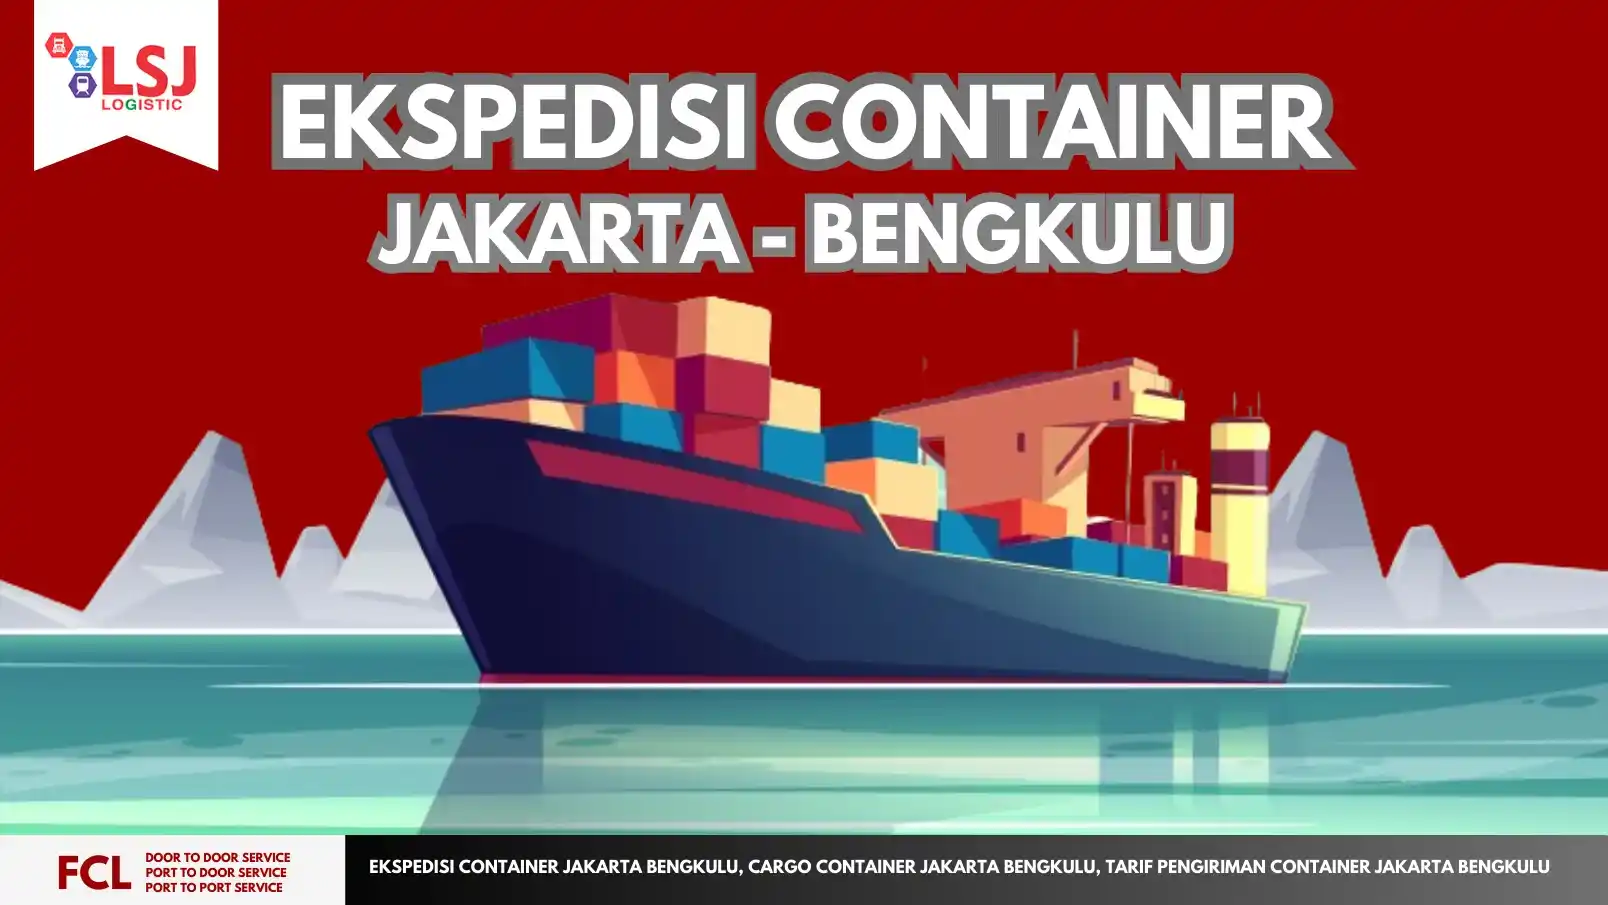 Harga Pengiriman Container Jakarta Bengkulu